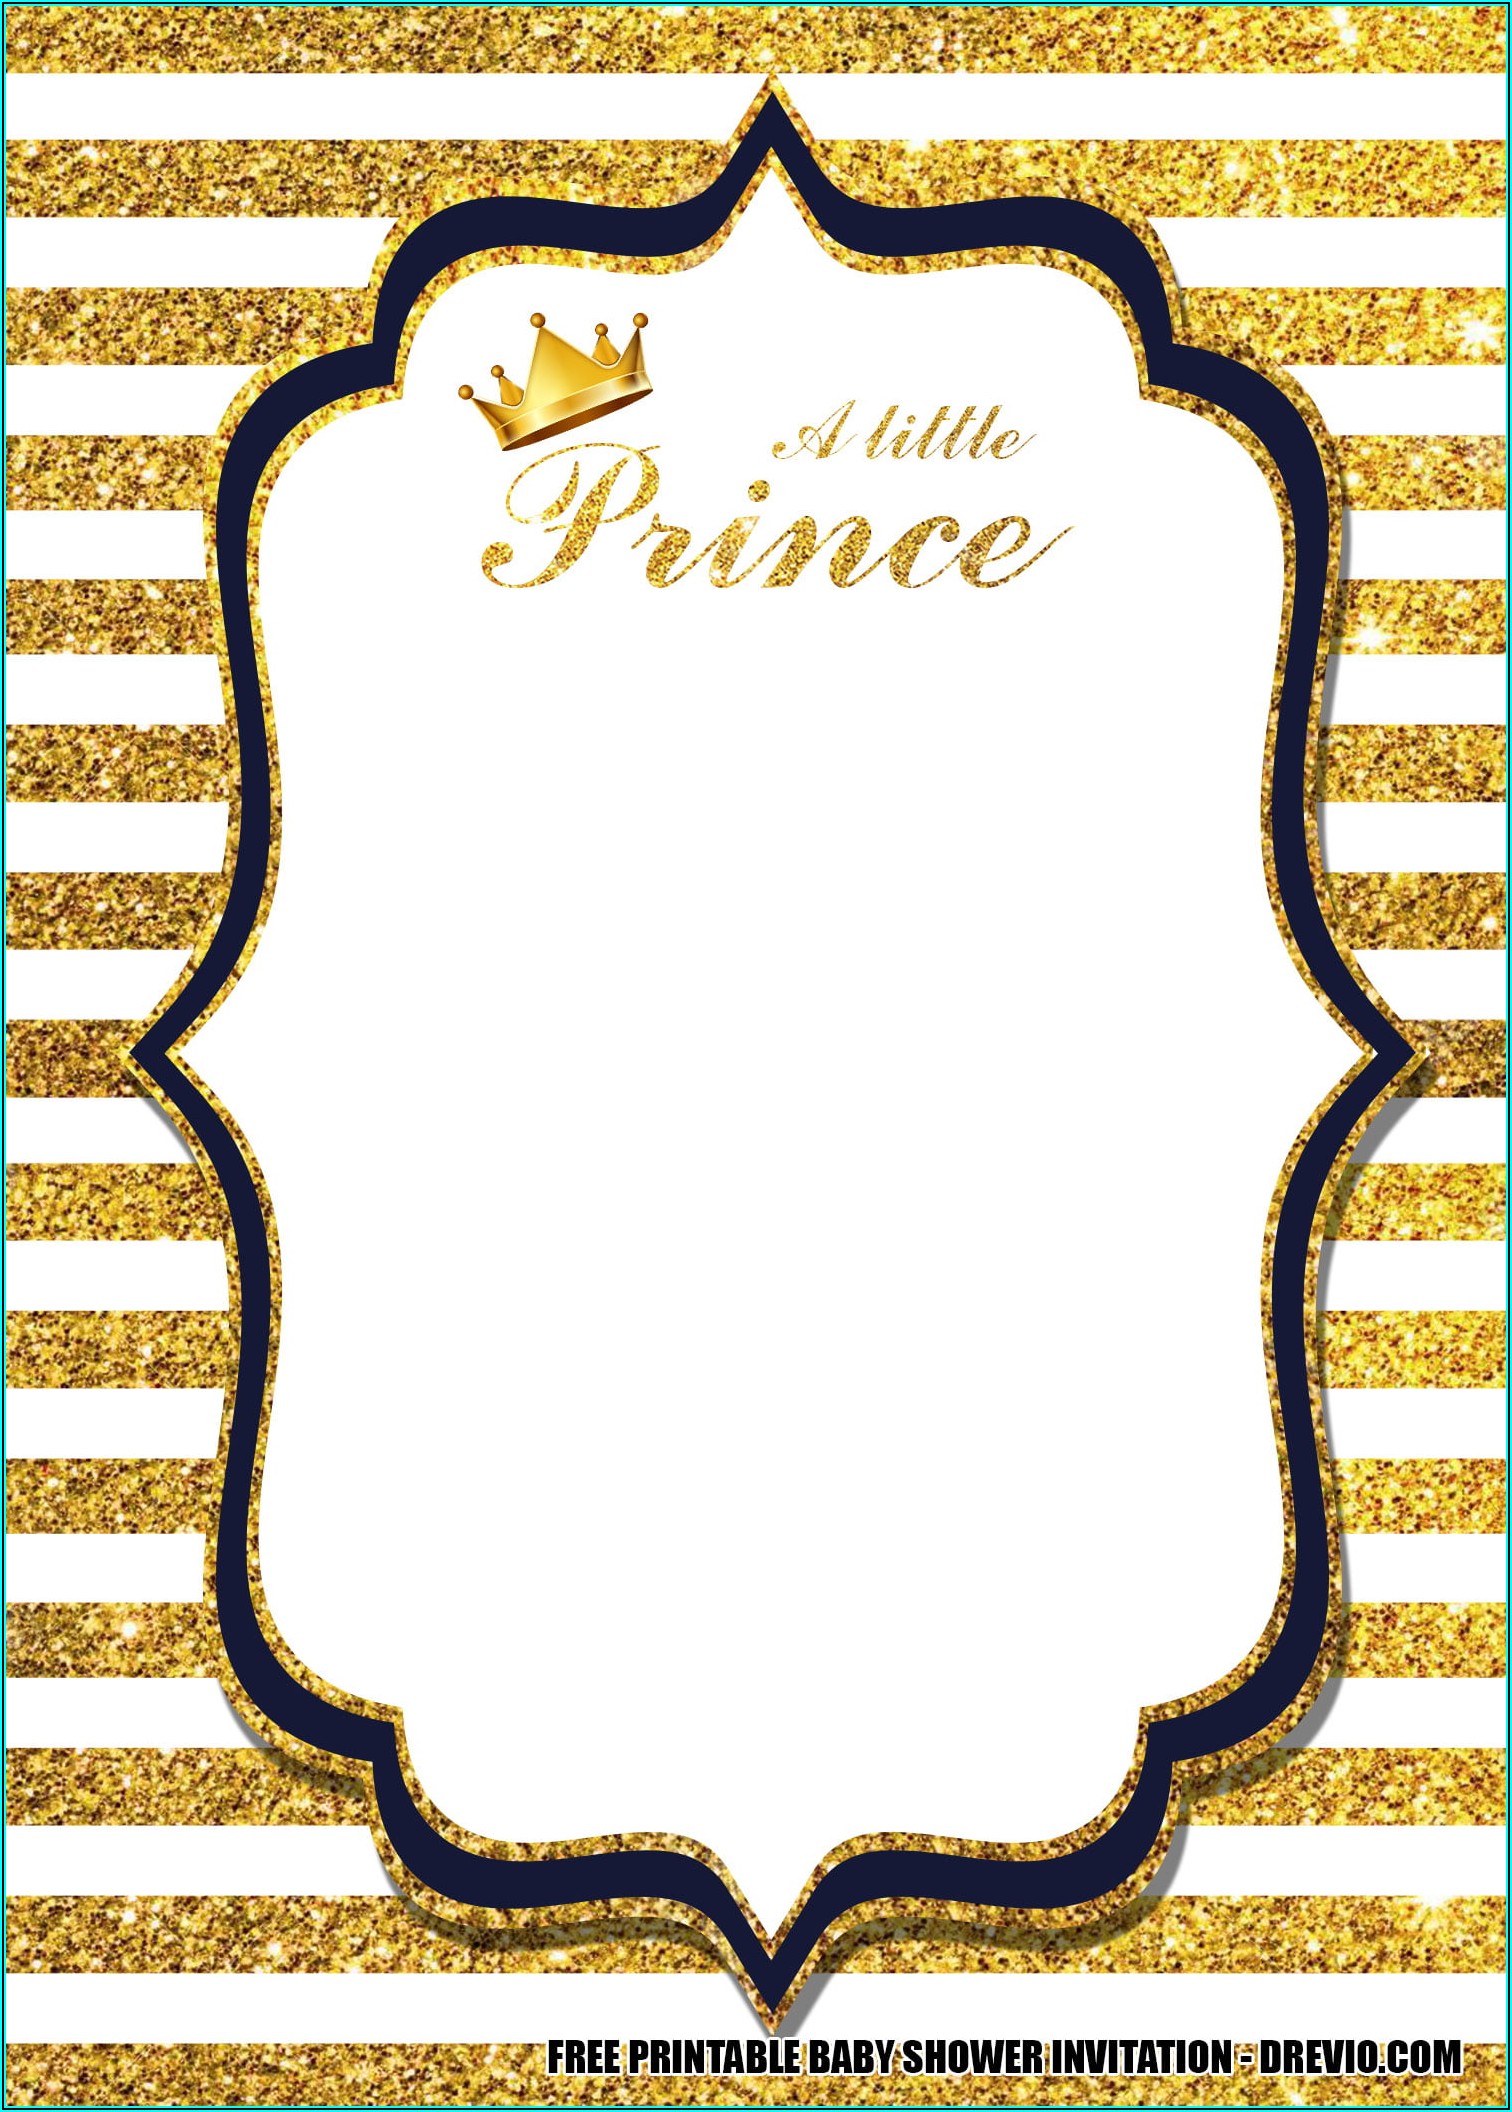 Downloadable Royal Prince Birthday Invitation Template Free